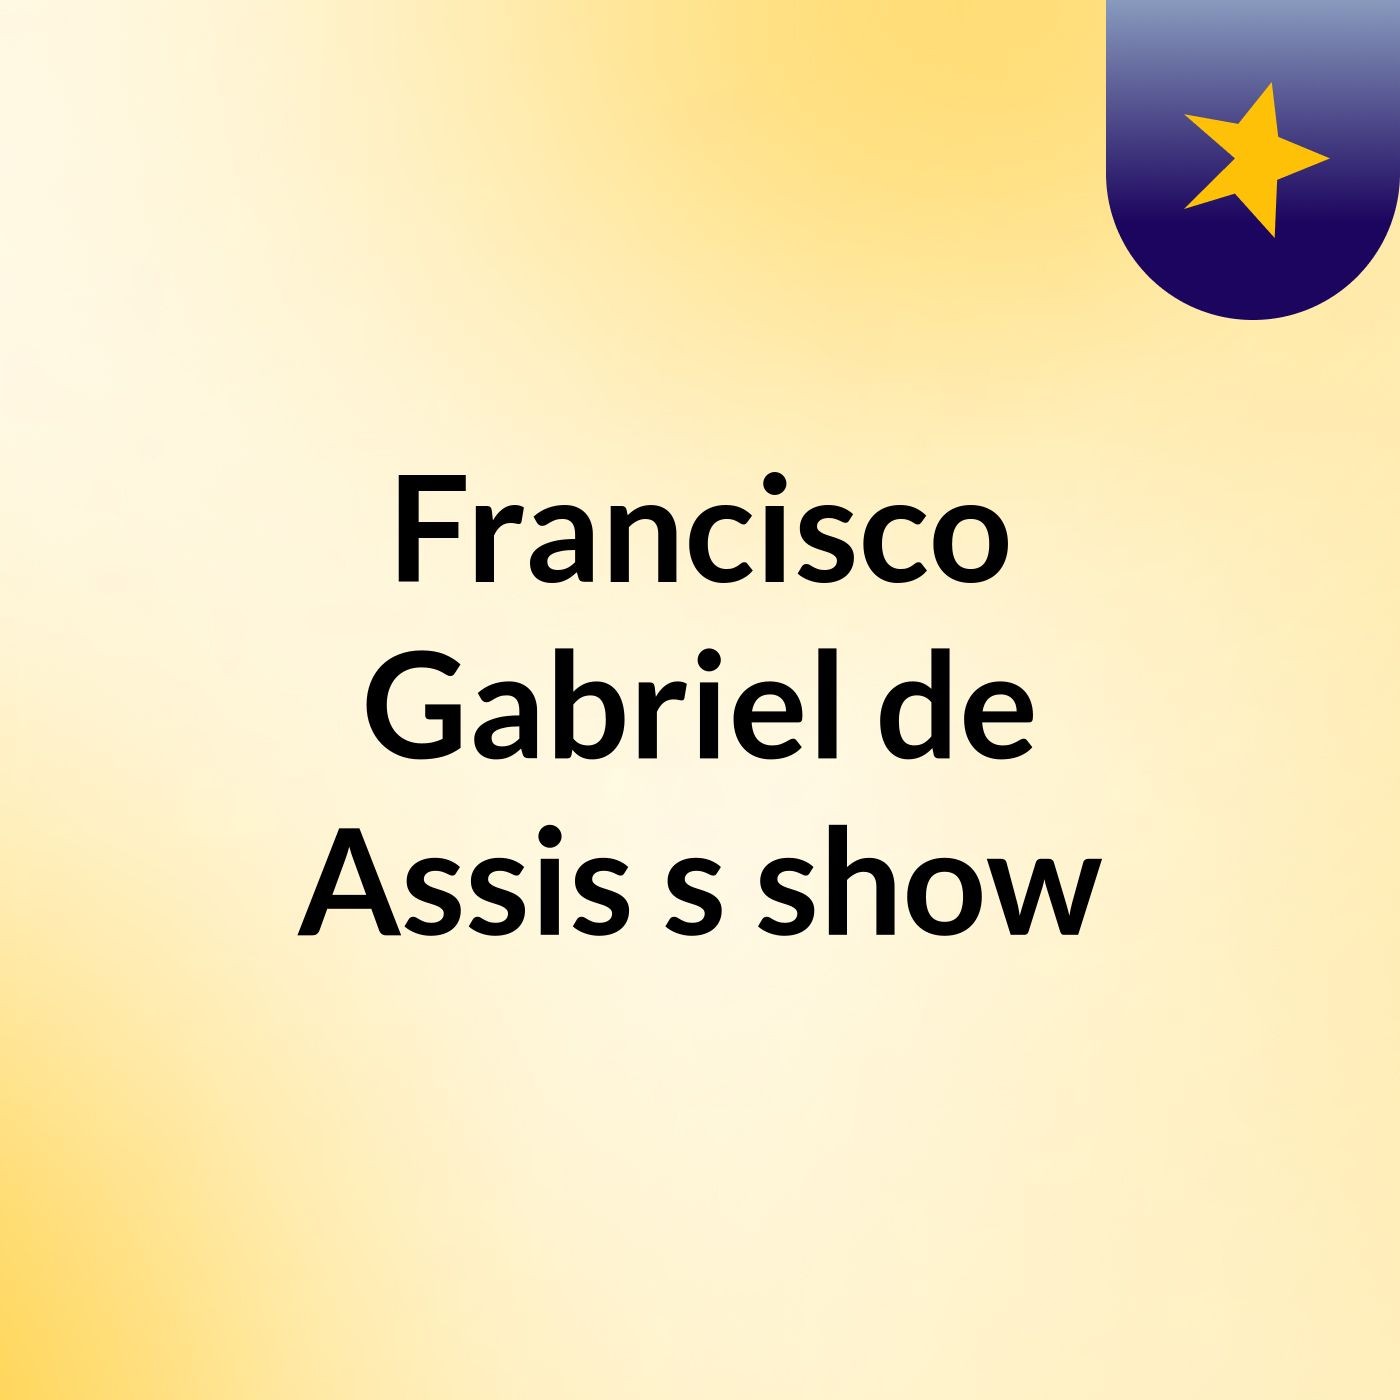 Francisco Gabriel de Assis's show